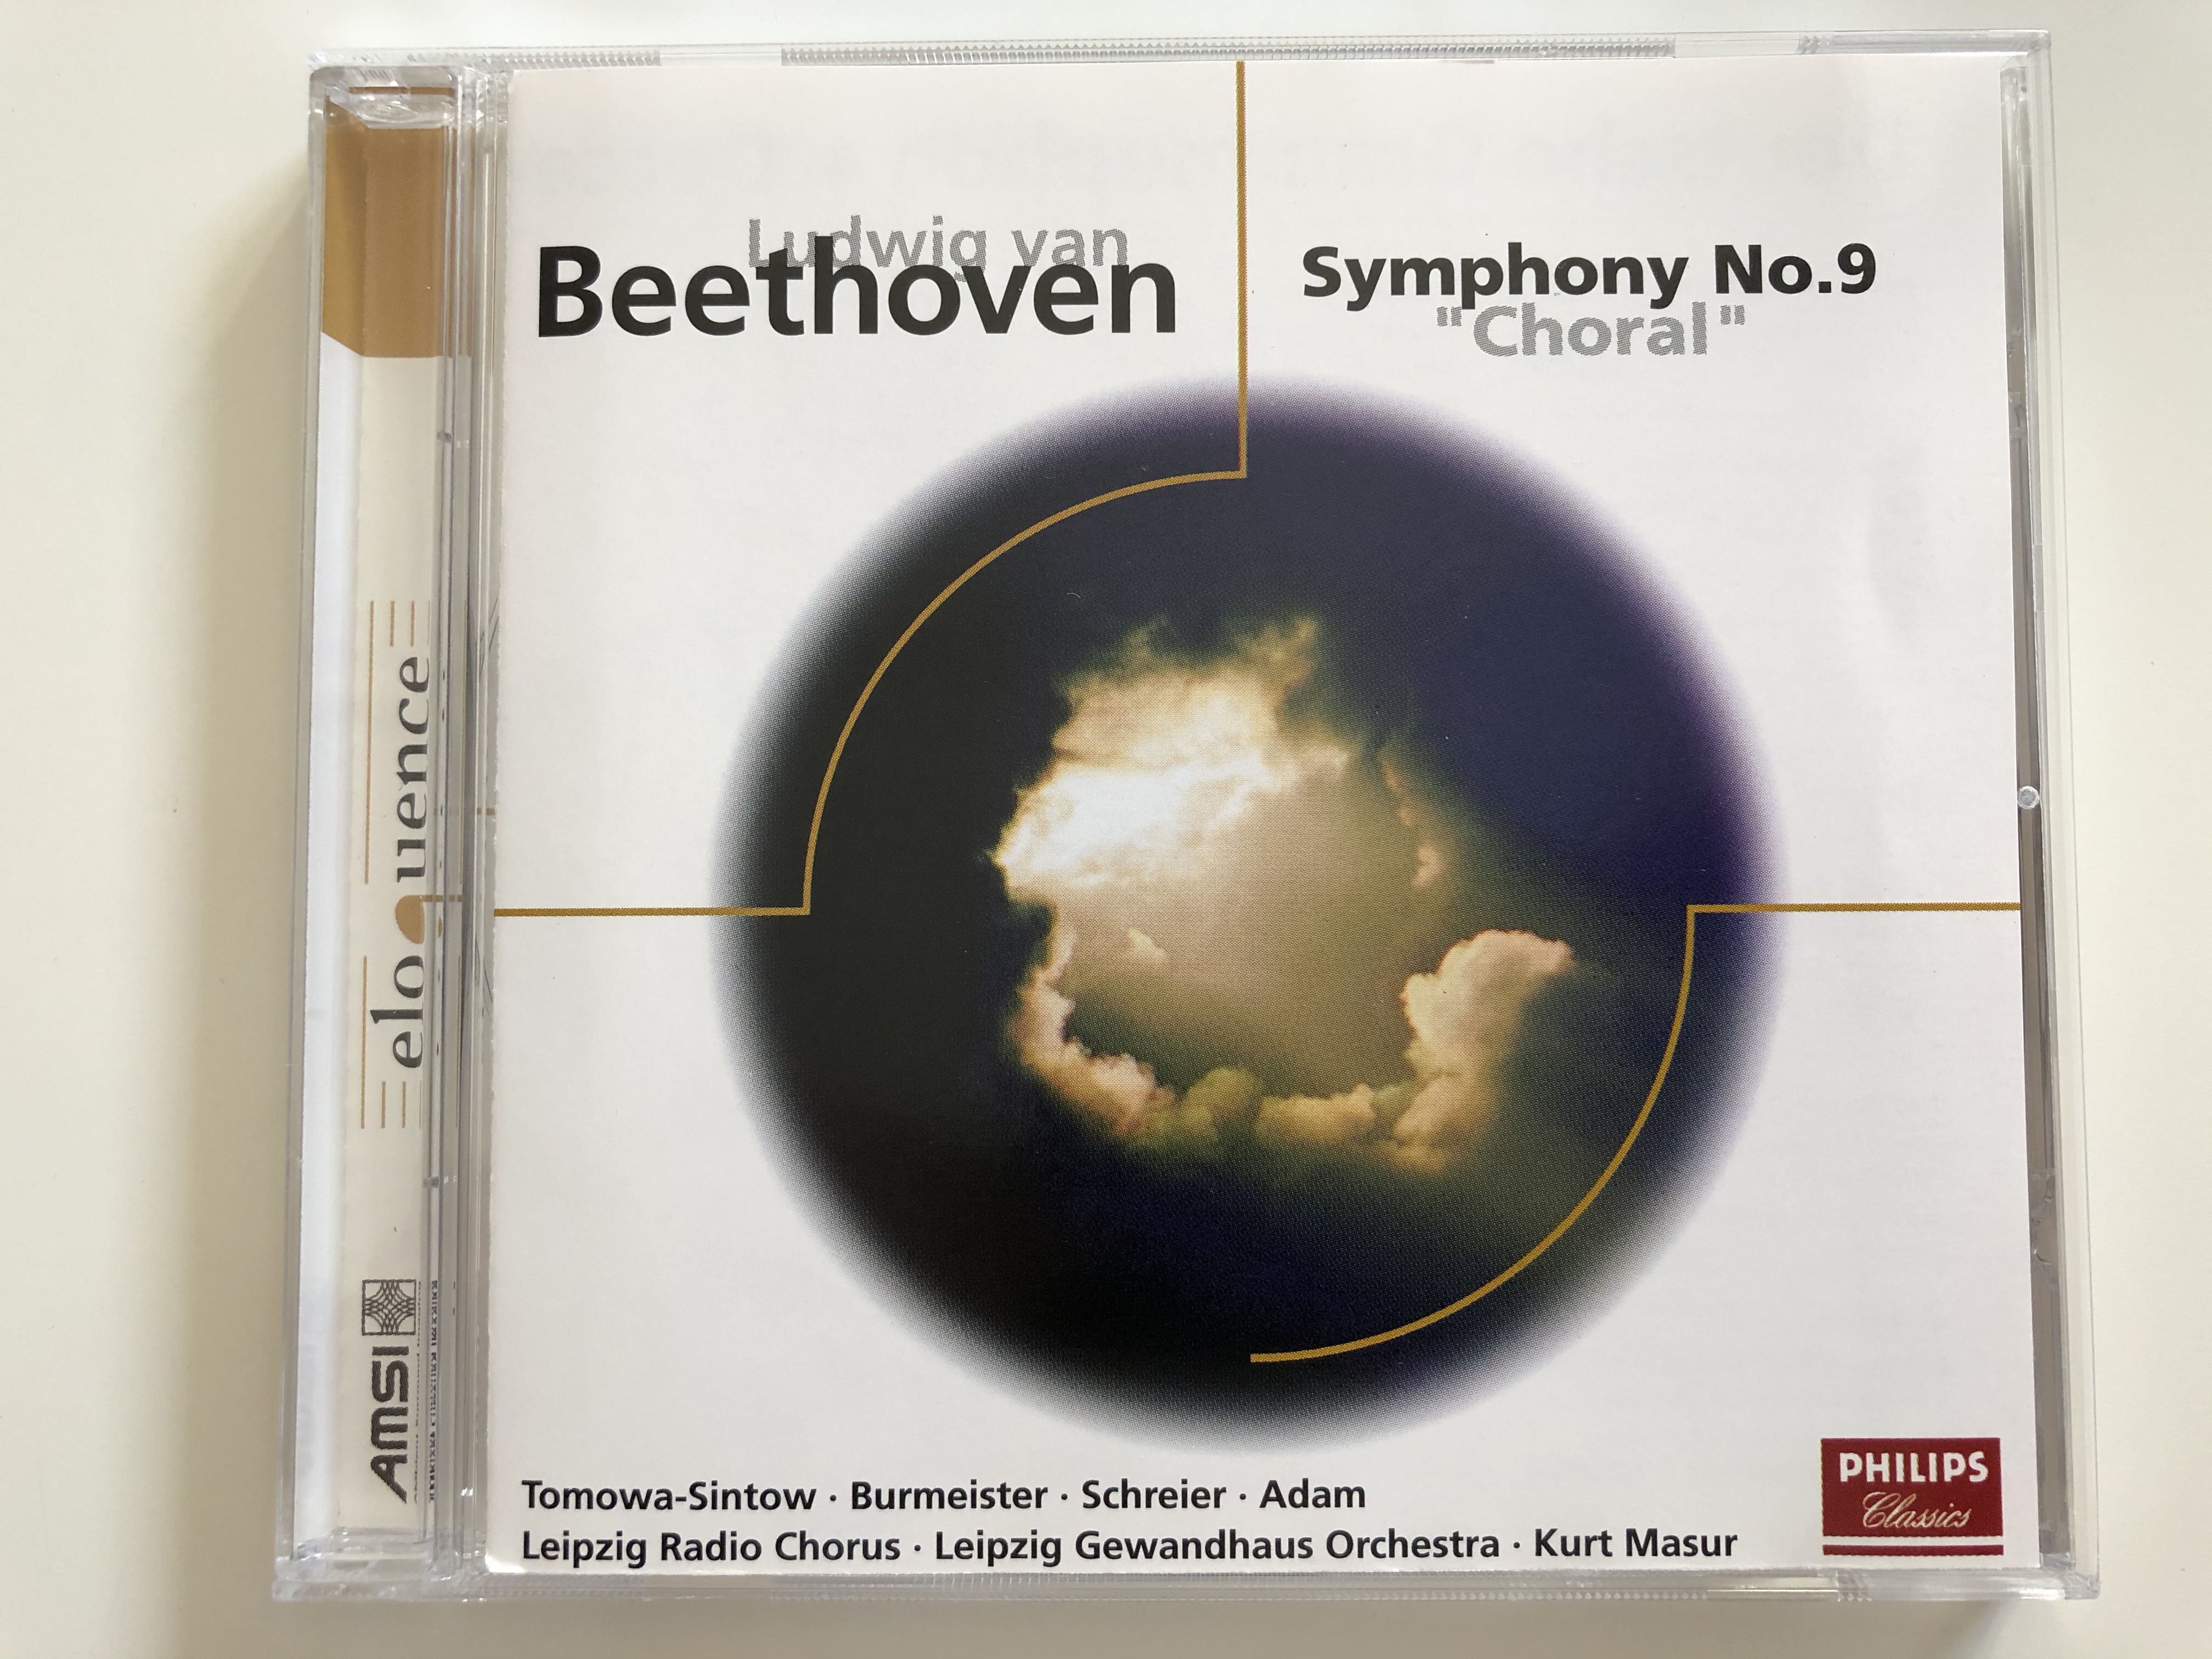 ludwig-van-beethoven-symphonie-nr.-9-choral-tomowa-sintow-burmeister-schreier-adam-leipzig-radio-chorus-leipzig-gewandhaus-orchestra-kurt-masur-philips-classics-audio-cd-1975-468-11-1-.jpg